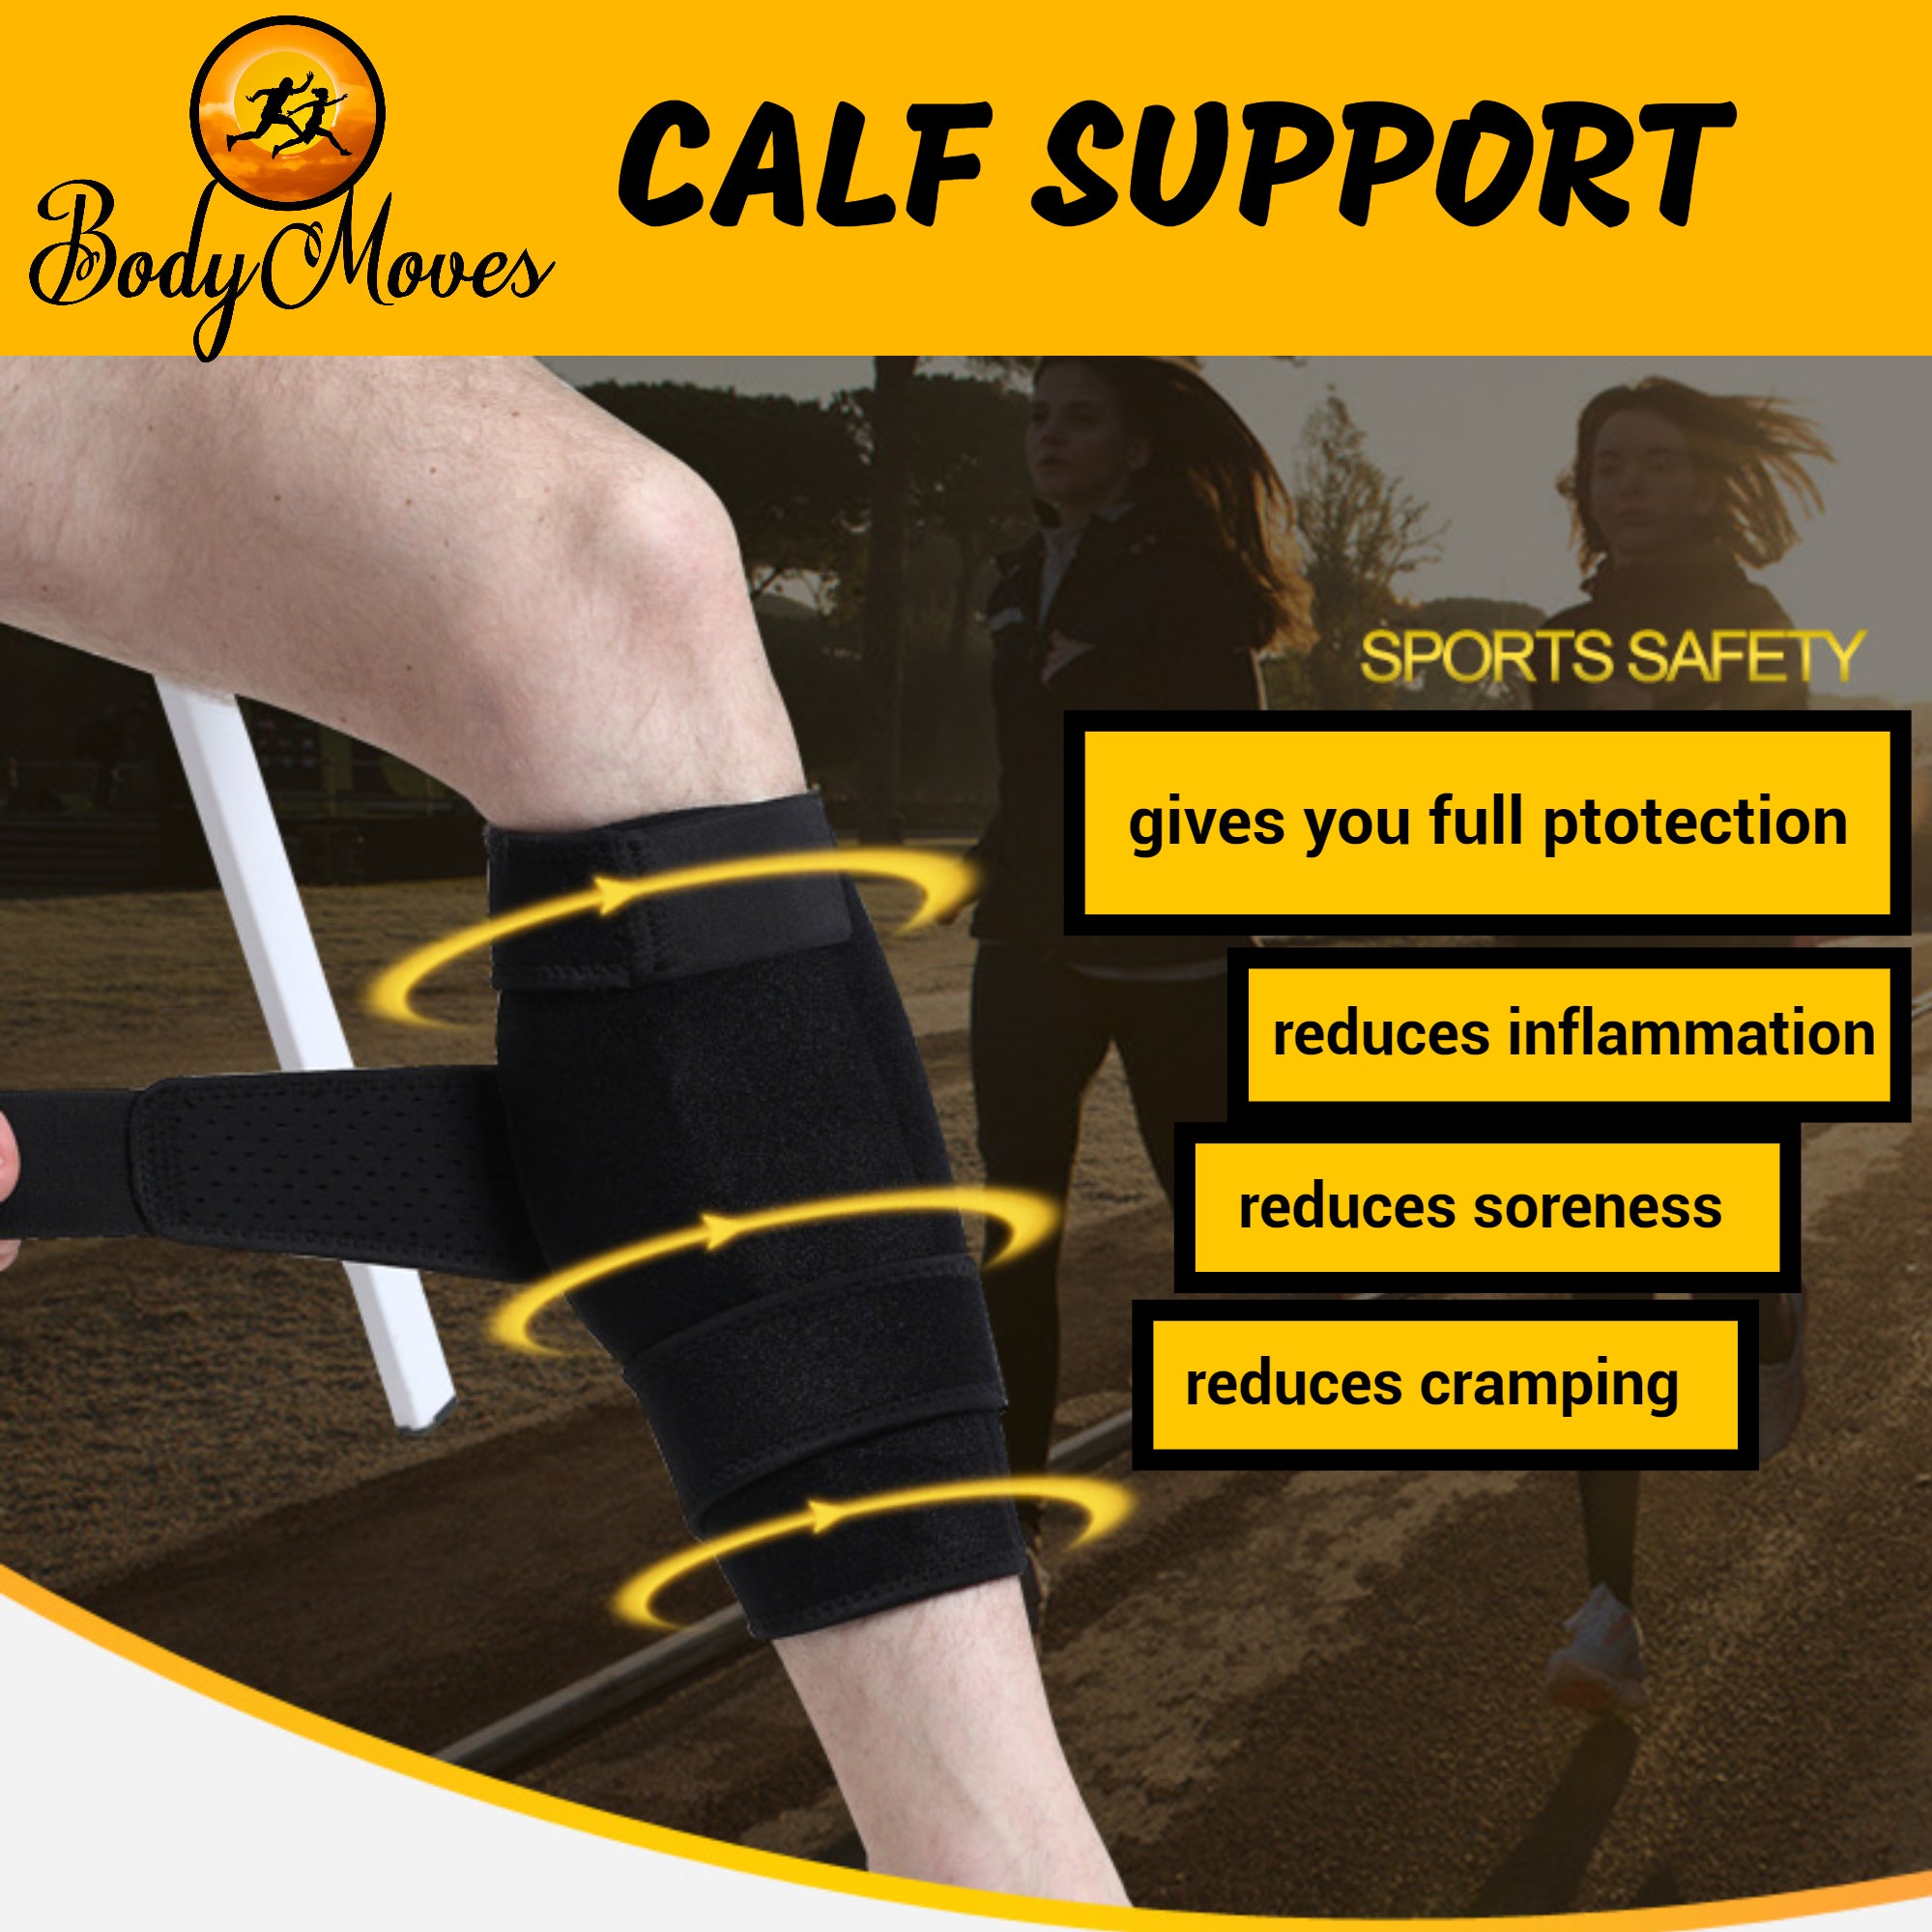  Calf Support